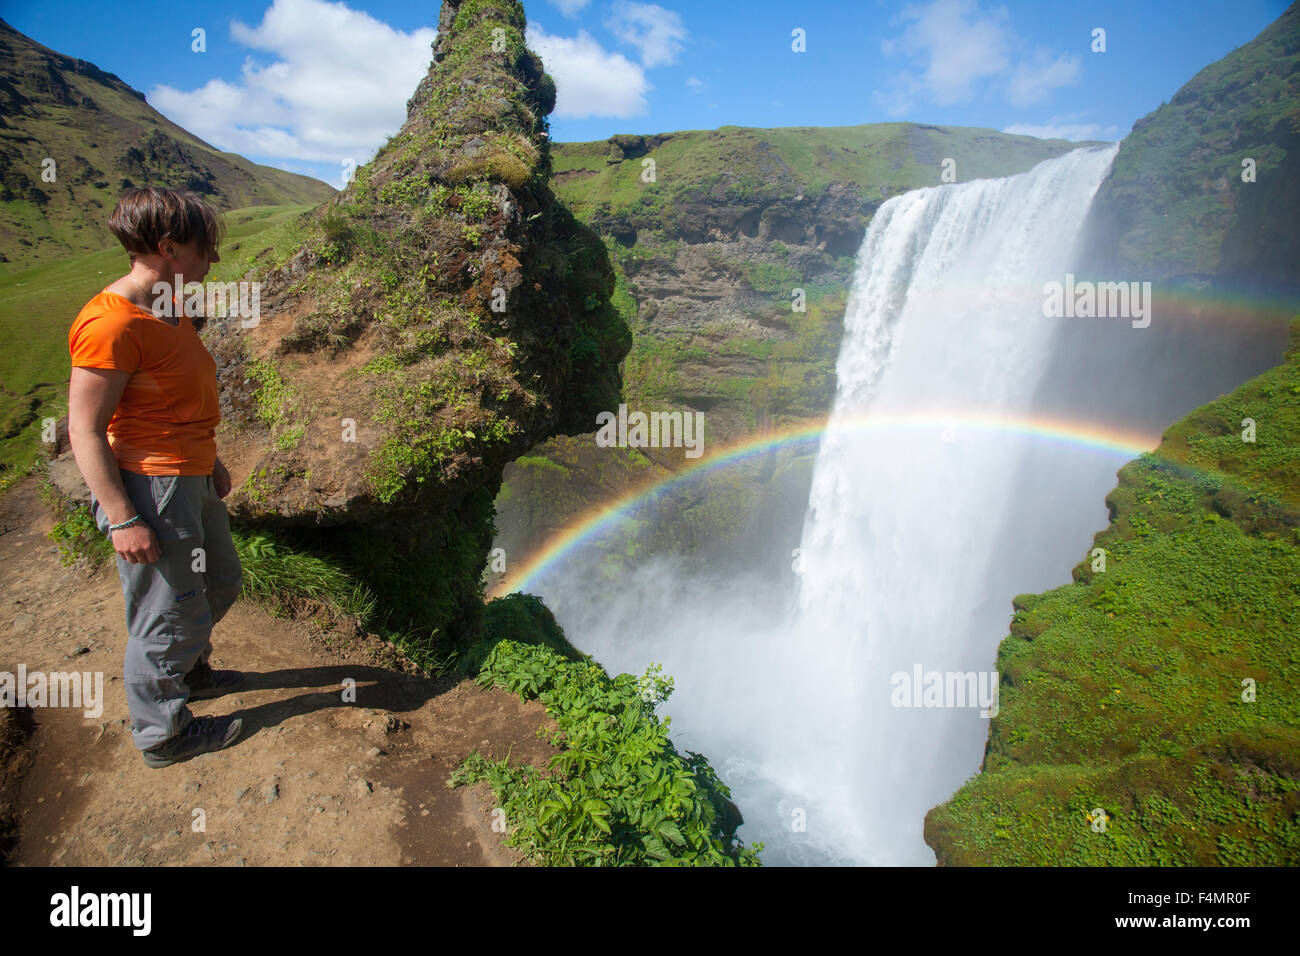 Personne admirant 60m de haut, la cascade Skogafoss, Skogar, Sudhurland, Islande. Banque D'Images